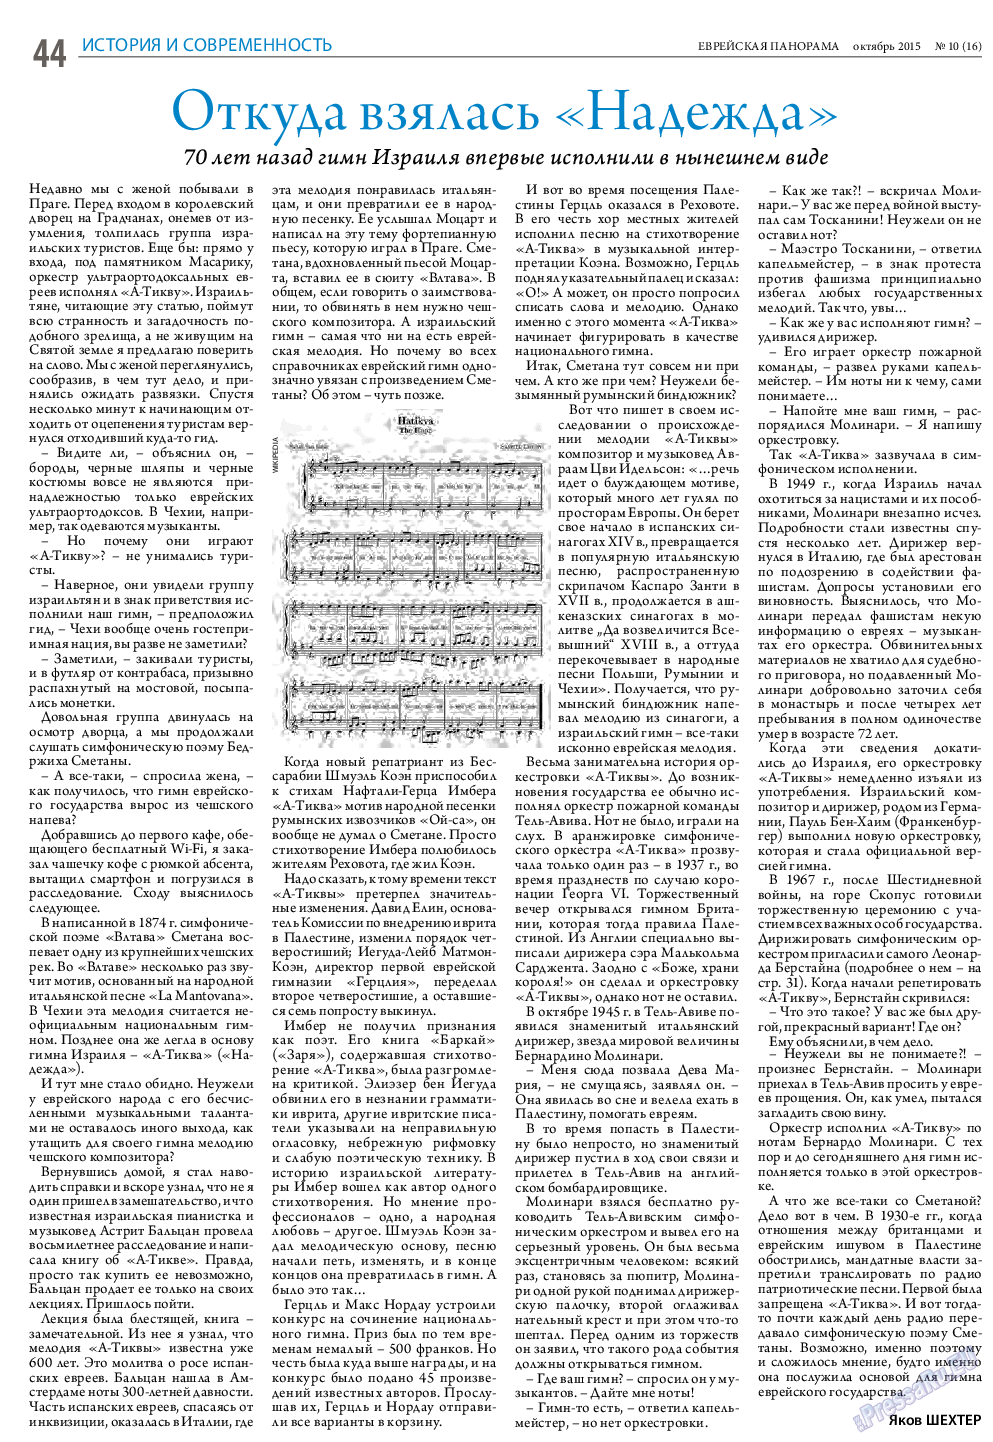 Еврейская панорама, газета. 2015 №10 стр.44